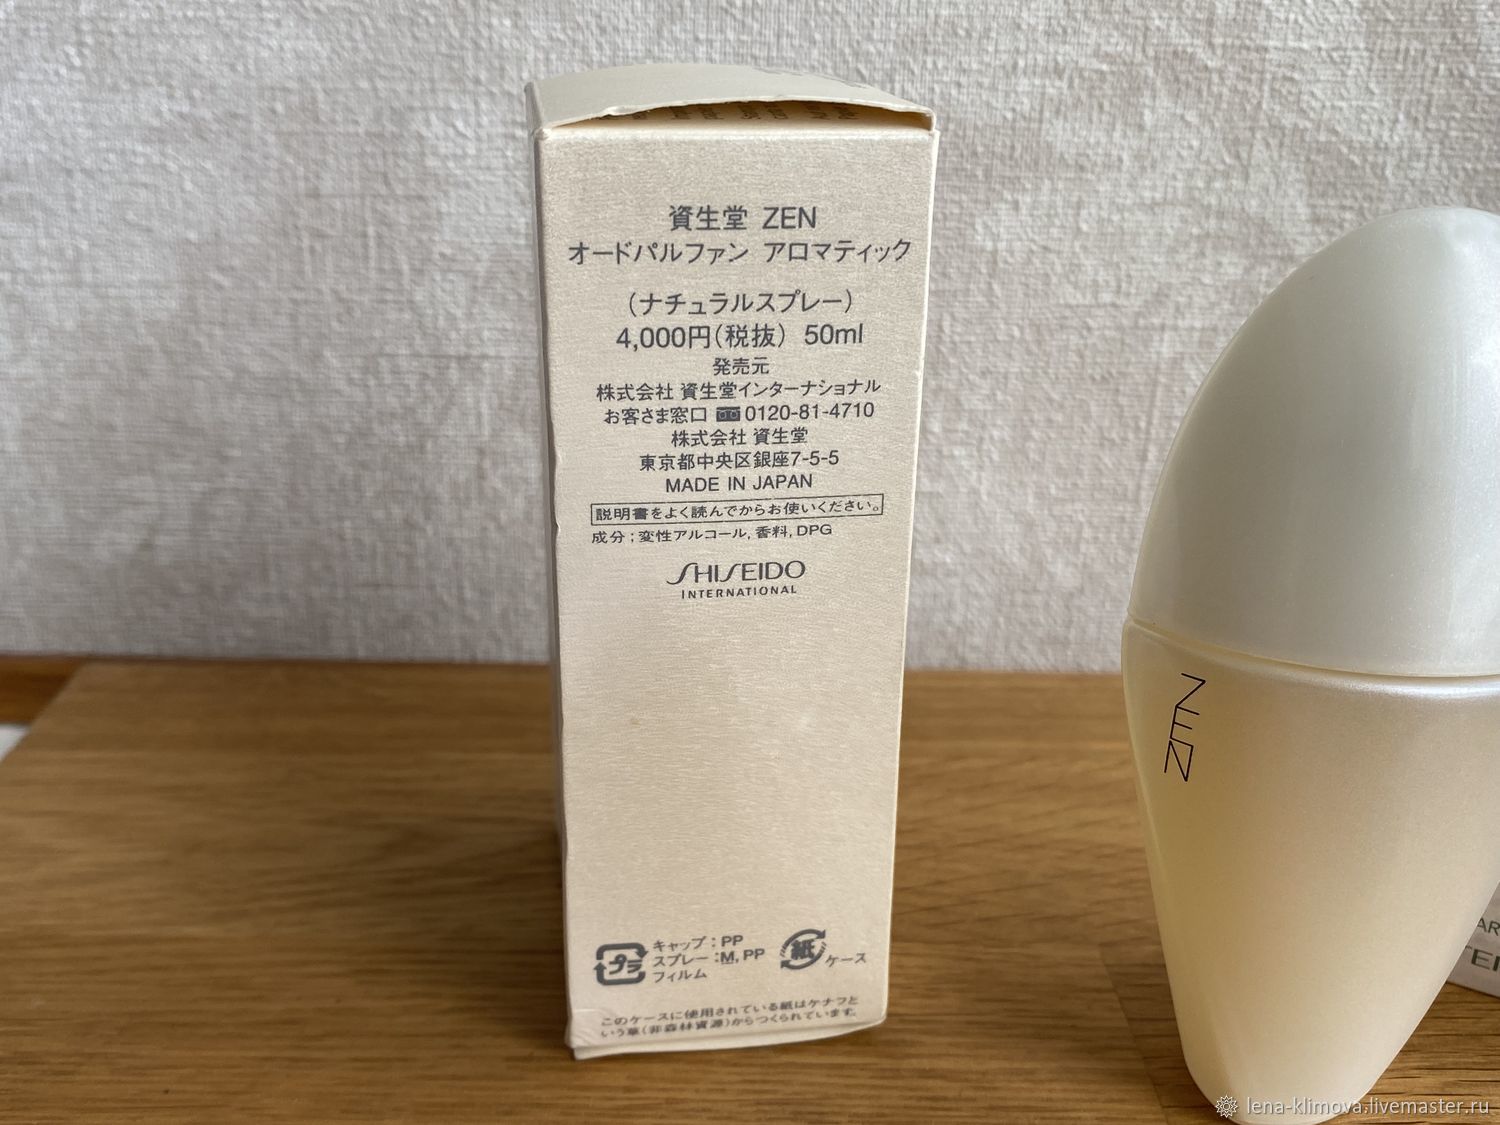 Shiseido 50. Шисейдо дзен Фрагрантика. Zen Shiseido Eau de Parfum Aromatique в длинном белом флаконе. Шисейдо дзен концентрат Фрагрантика как выглядит флакон.